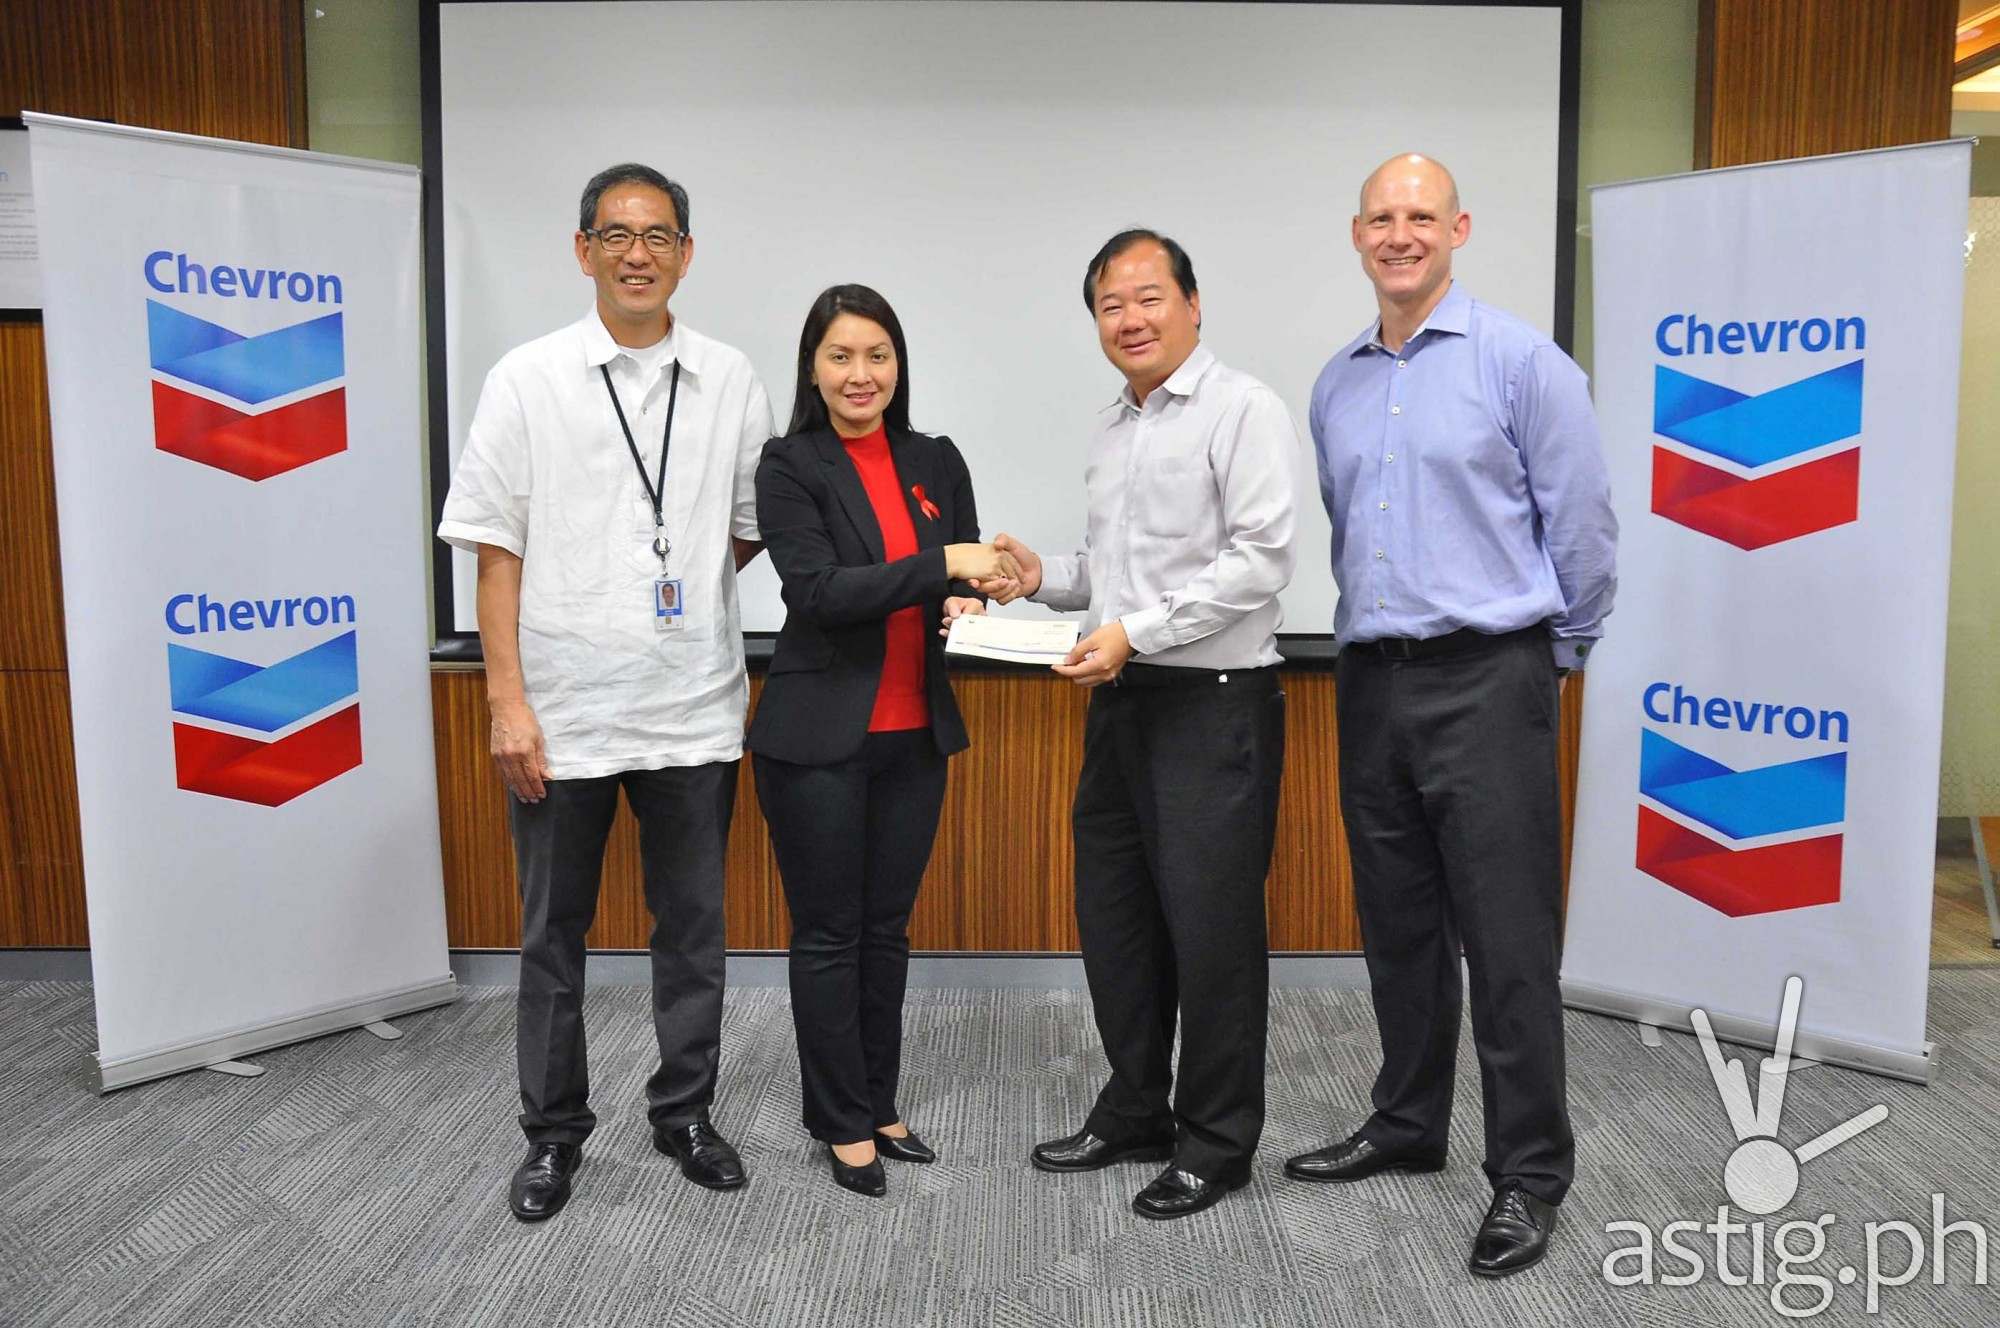 Chevron donates P1 million to Red Cross for rebuilding communities damaged by Typhoon Lando